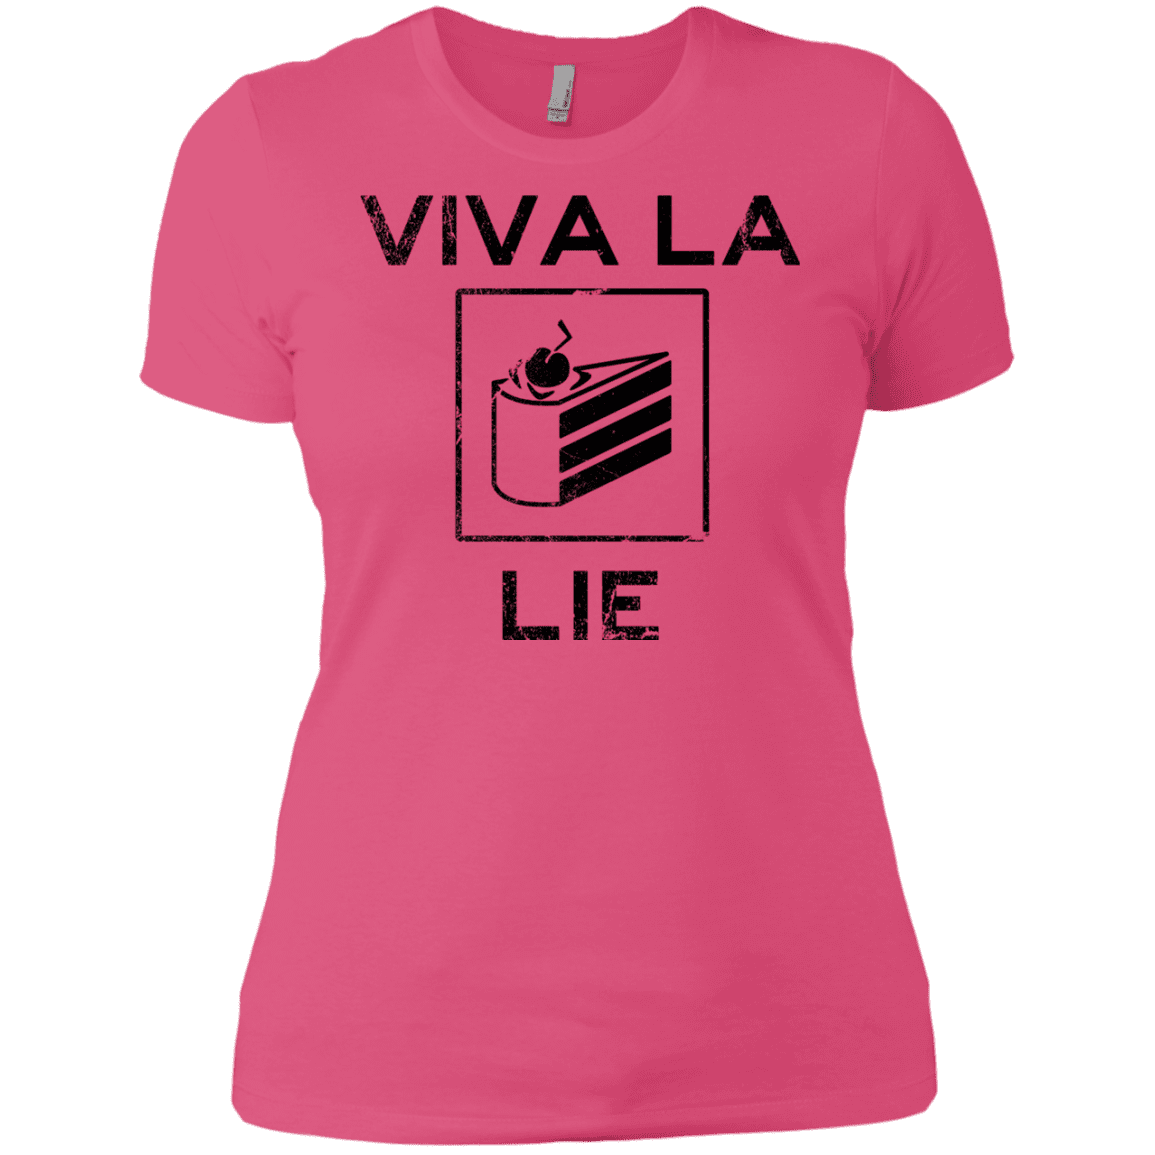 T-Shirts Hot Pink / X-Small Viva La Lie Women's Premium T-Shirt